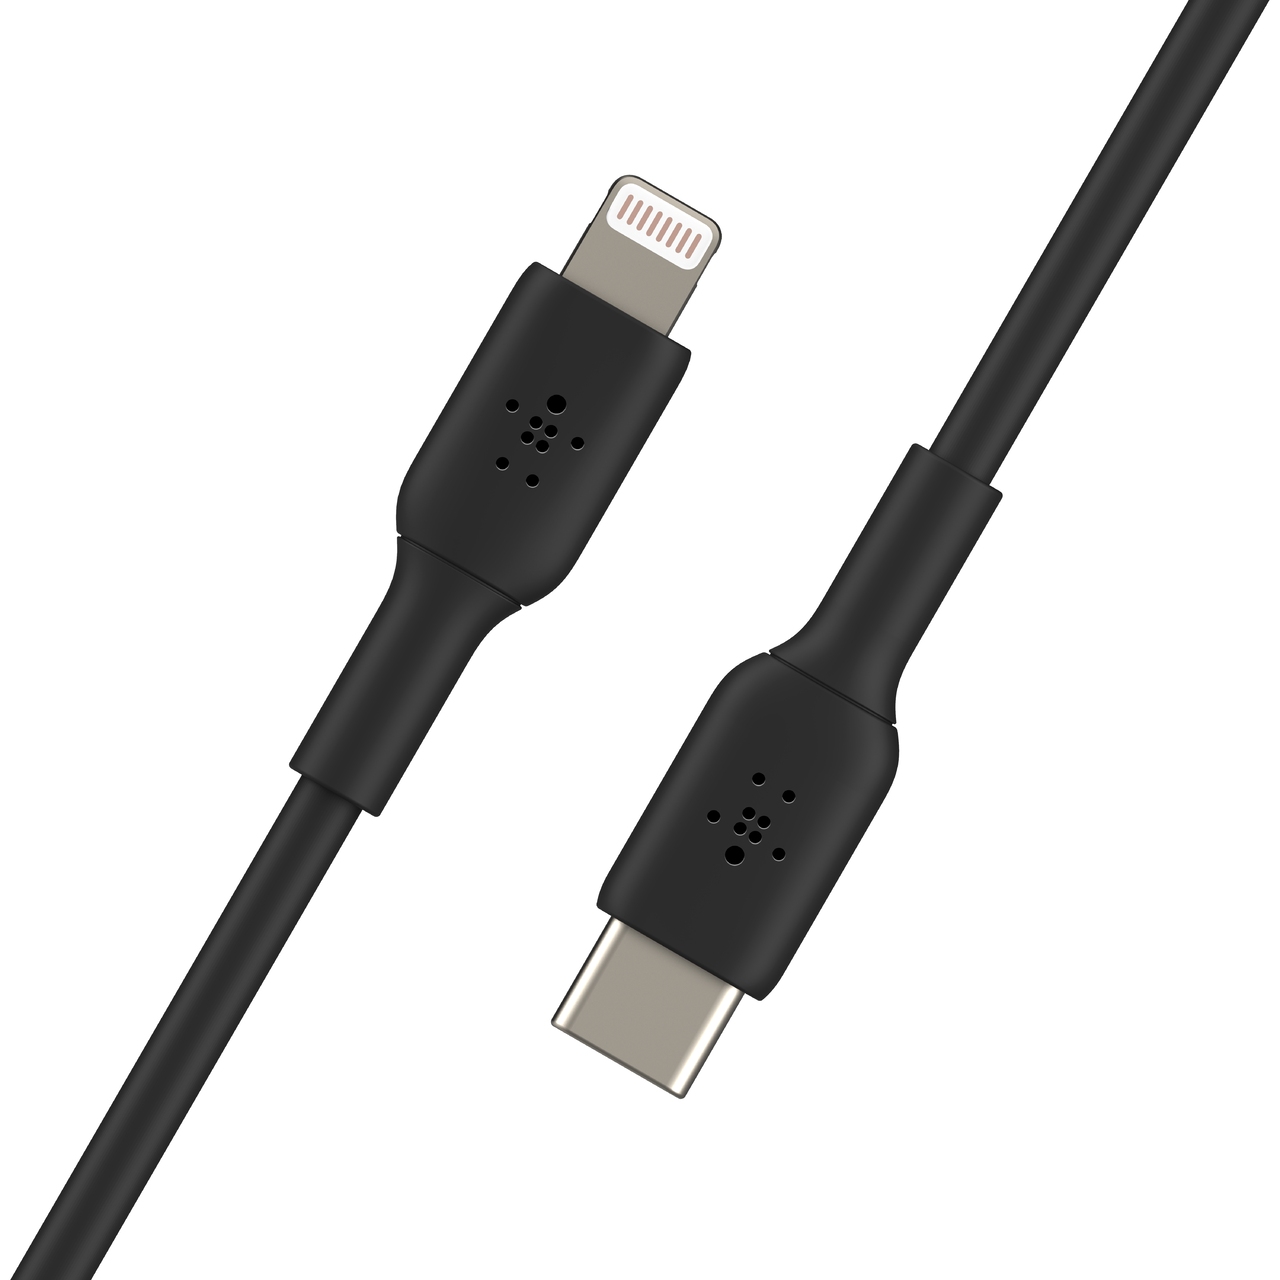 Obrázek Belkin Lighting to USB-C kabel, 2m, černý